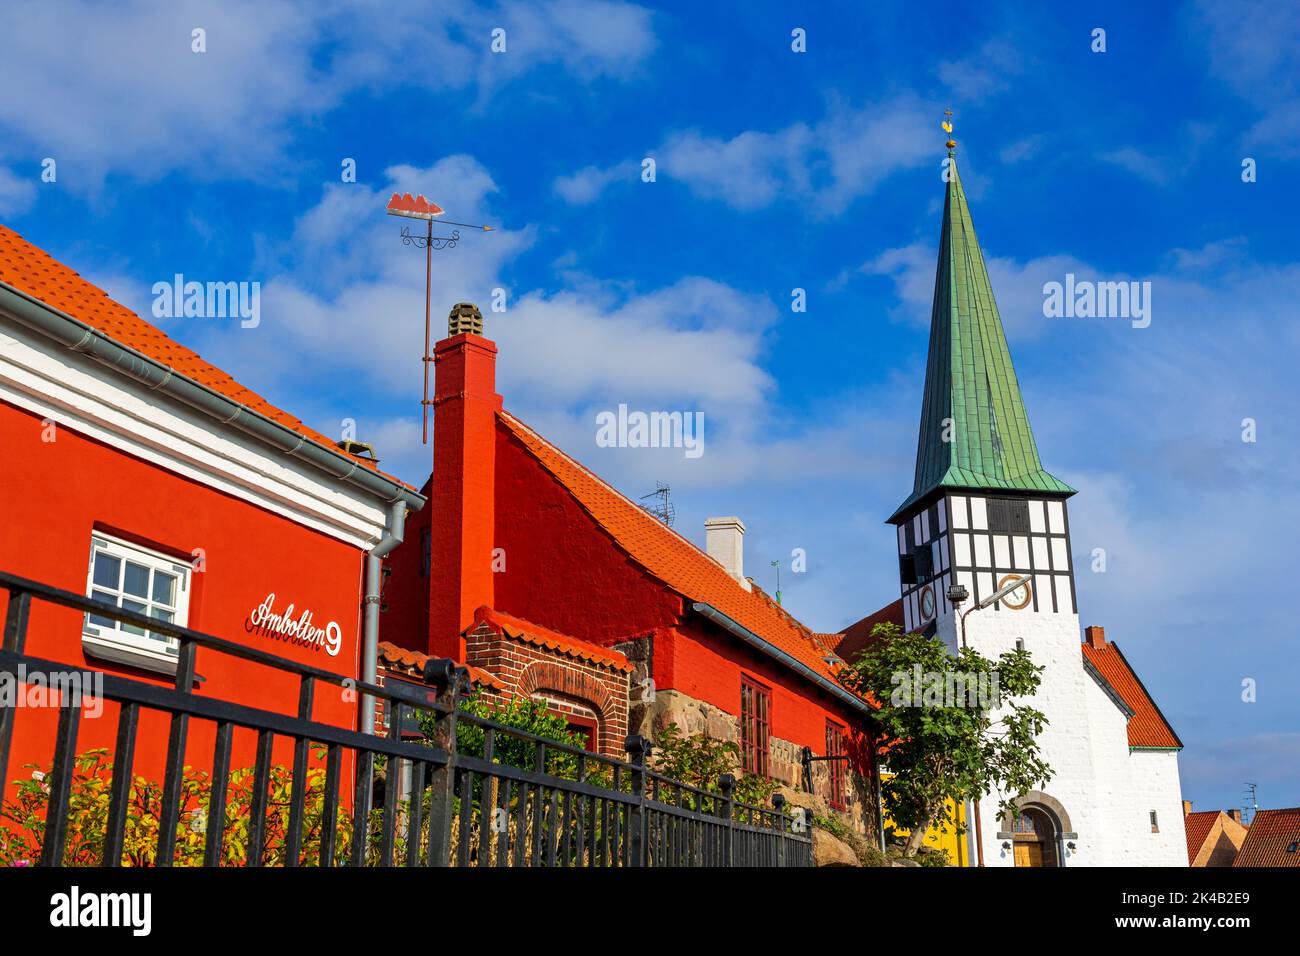 St. Nicolas' Church, Ronne City,Bornholm Island, Denmark, Europe Stock Photo